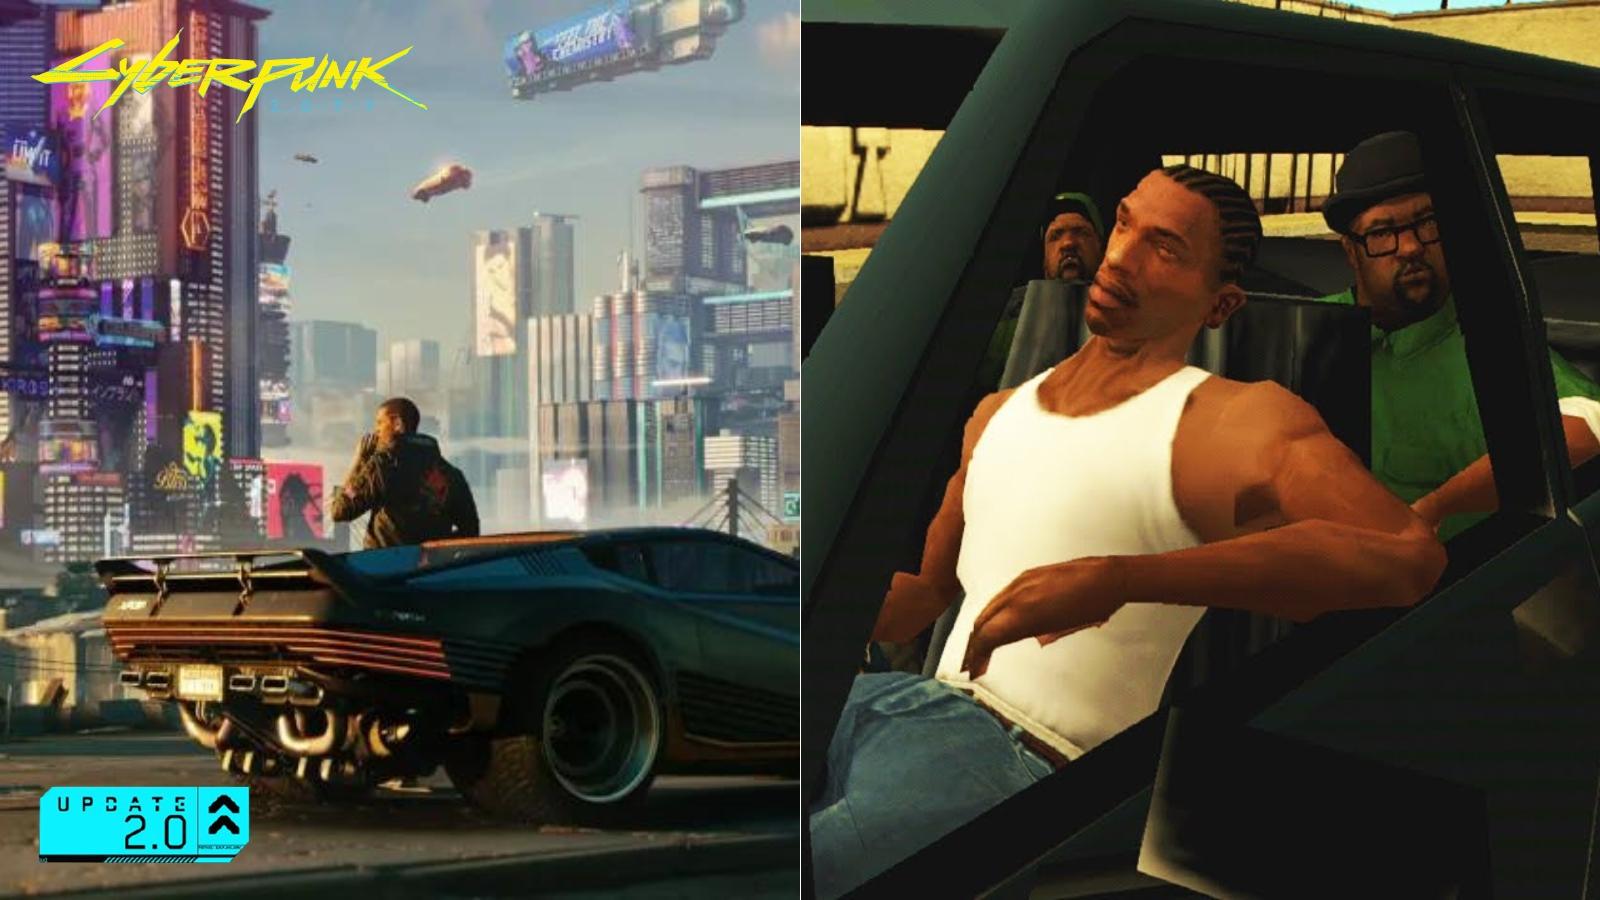 GTA: Vice City Trends Following Remaster Rumors